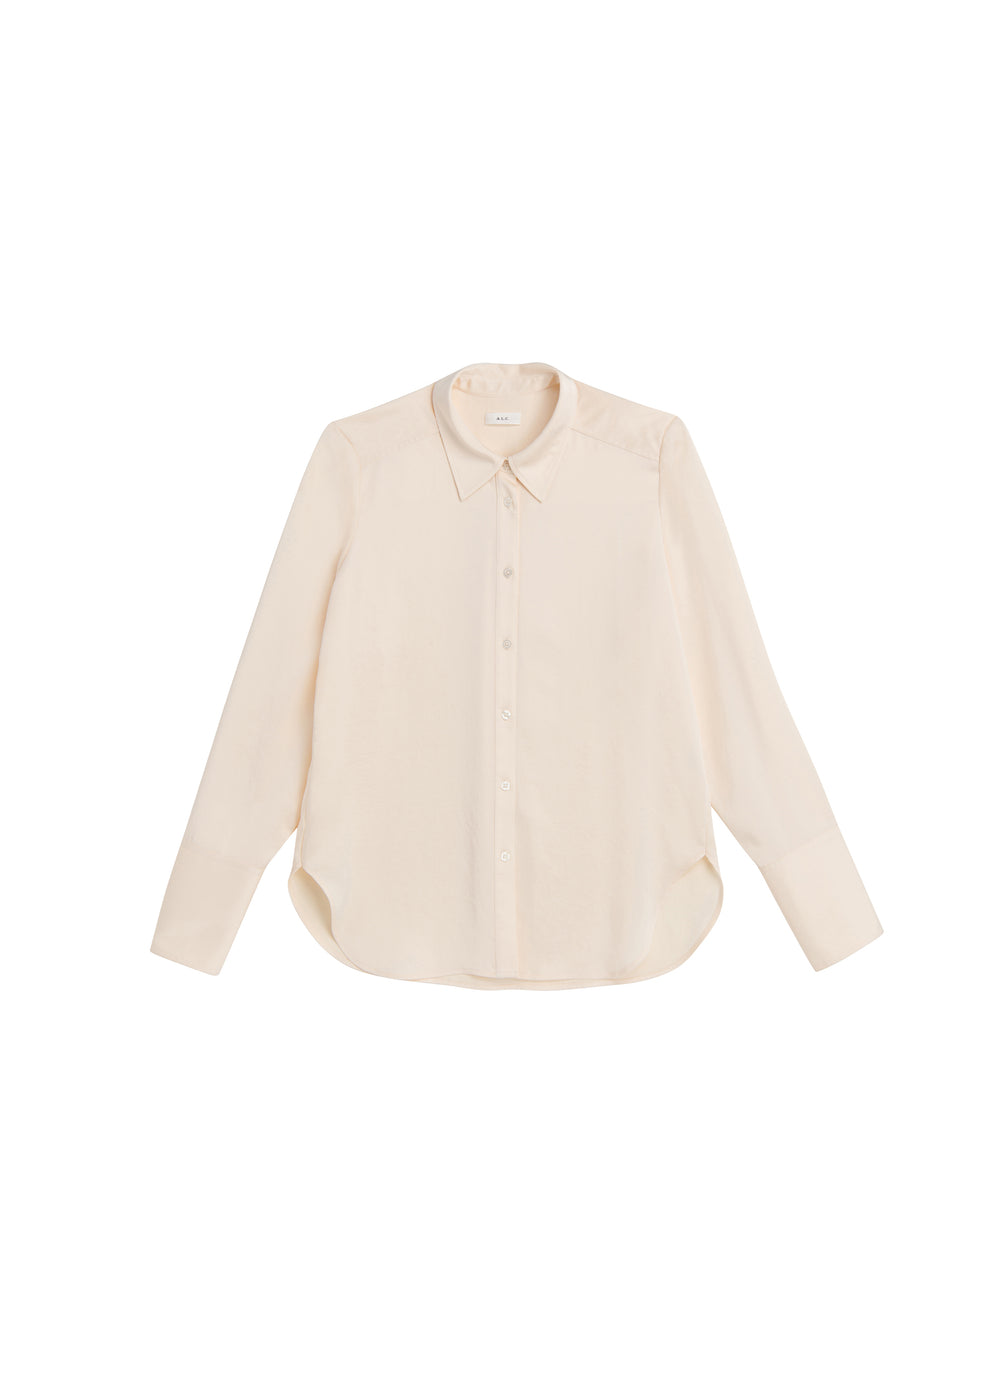 flatlay of cream long sleeve button down collared shirt